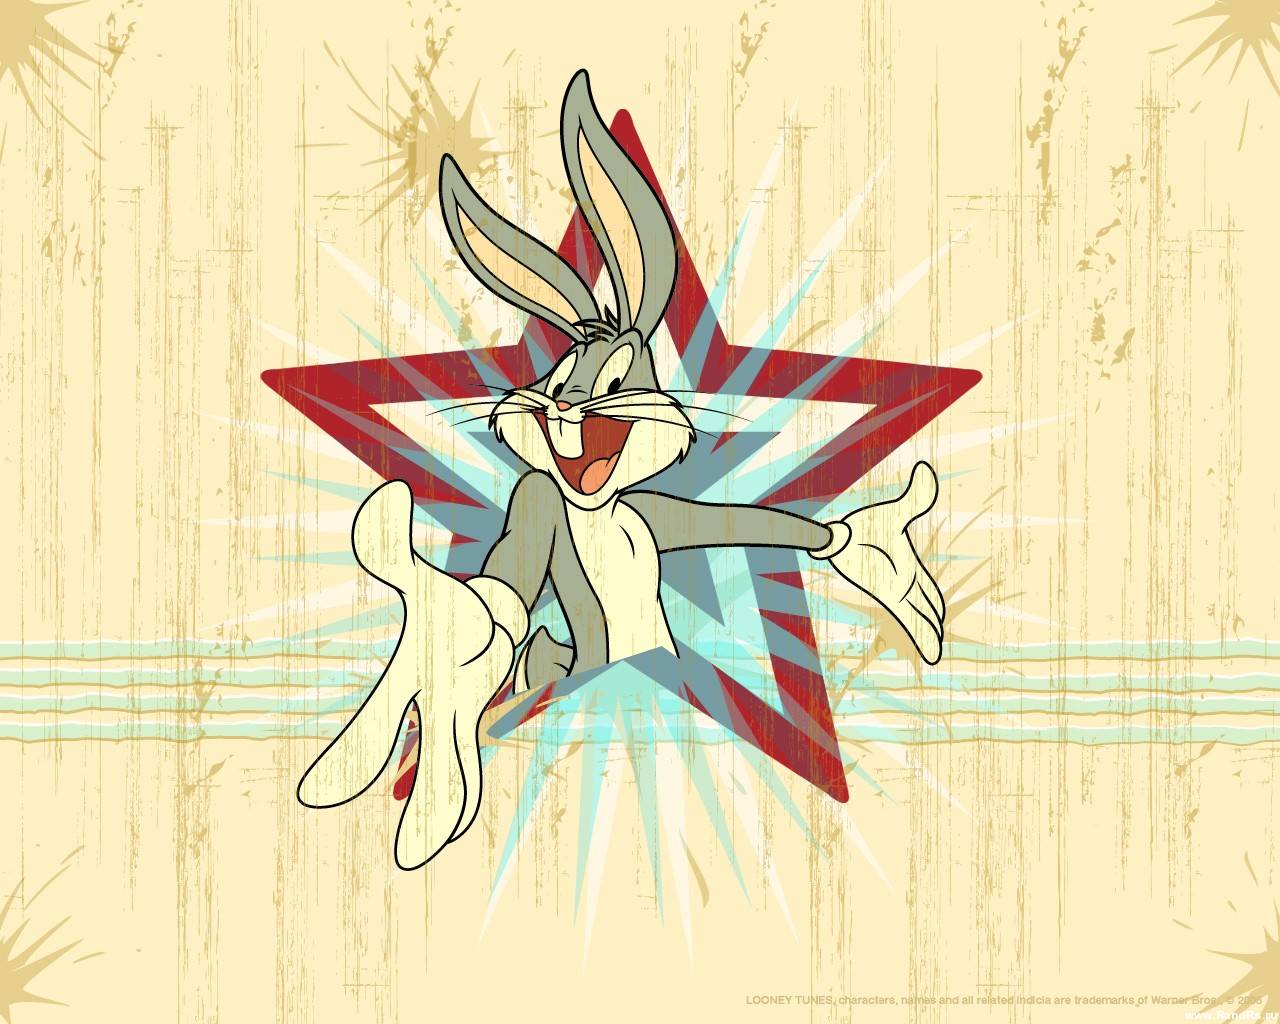 Bugs Bunny wallpaper hd free download